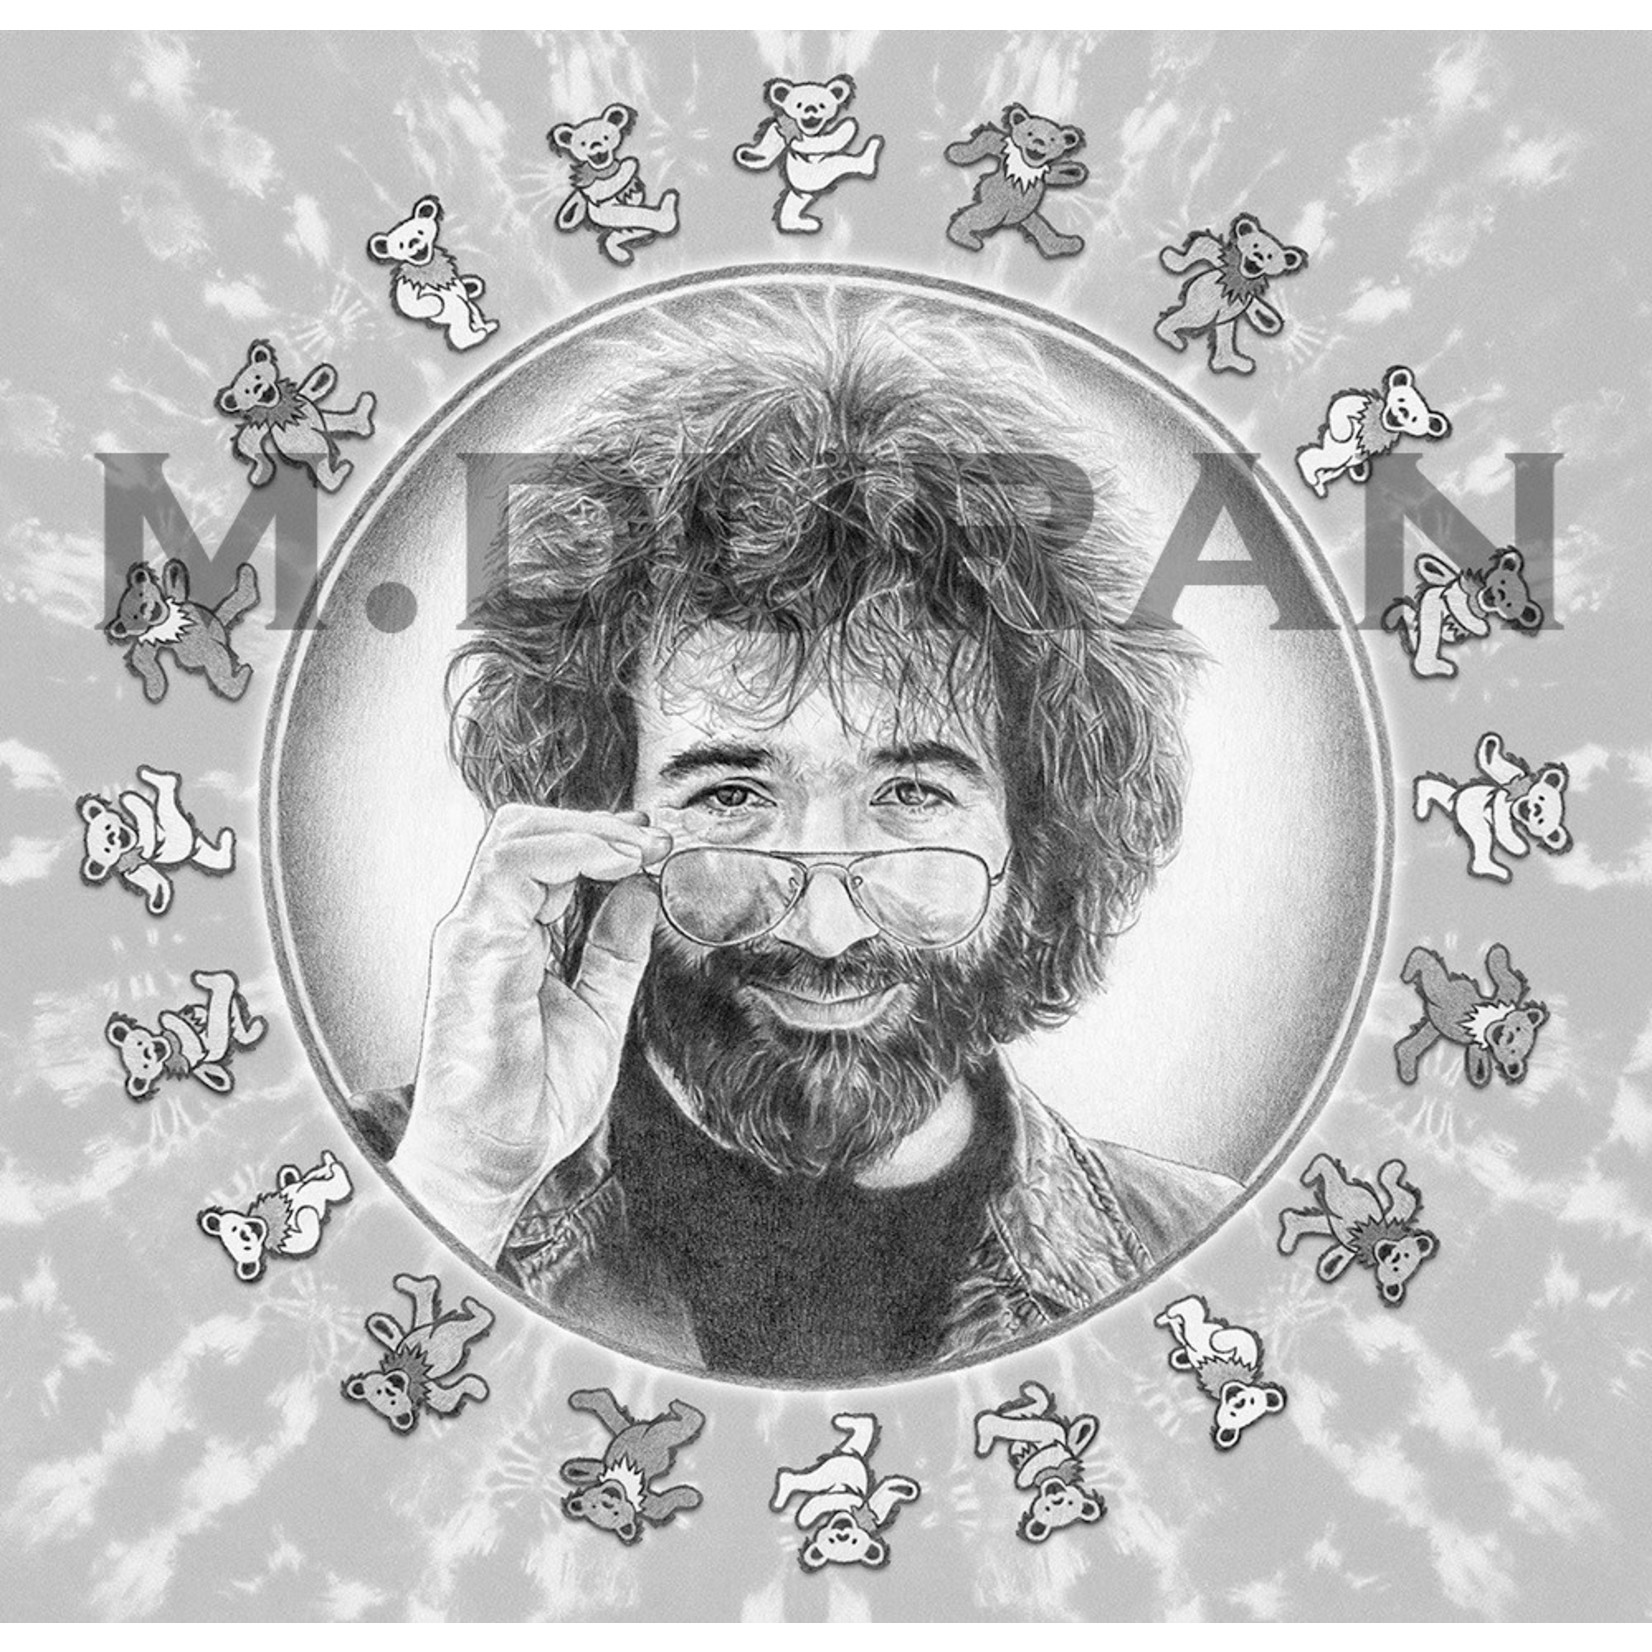 Rock Your Walls Off Jerry Garcia Portrait (Poster) [18"x24"]